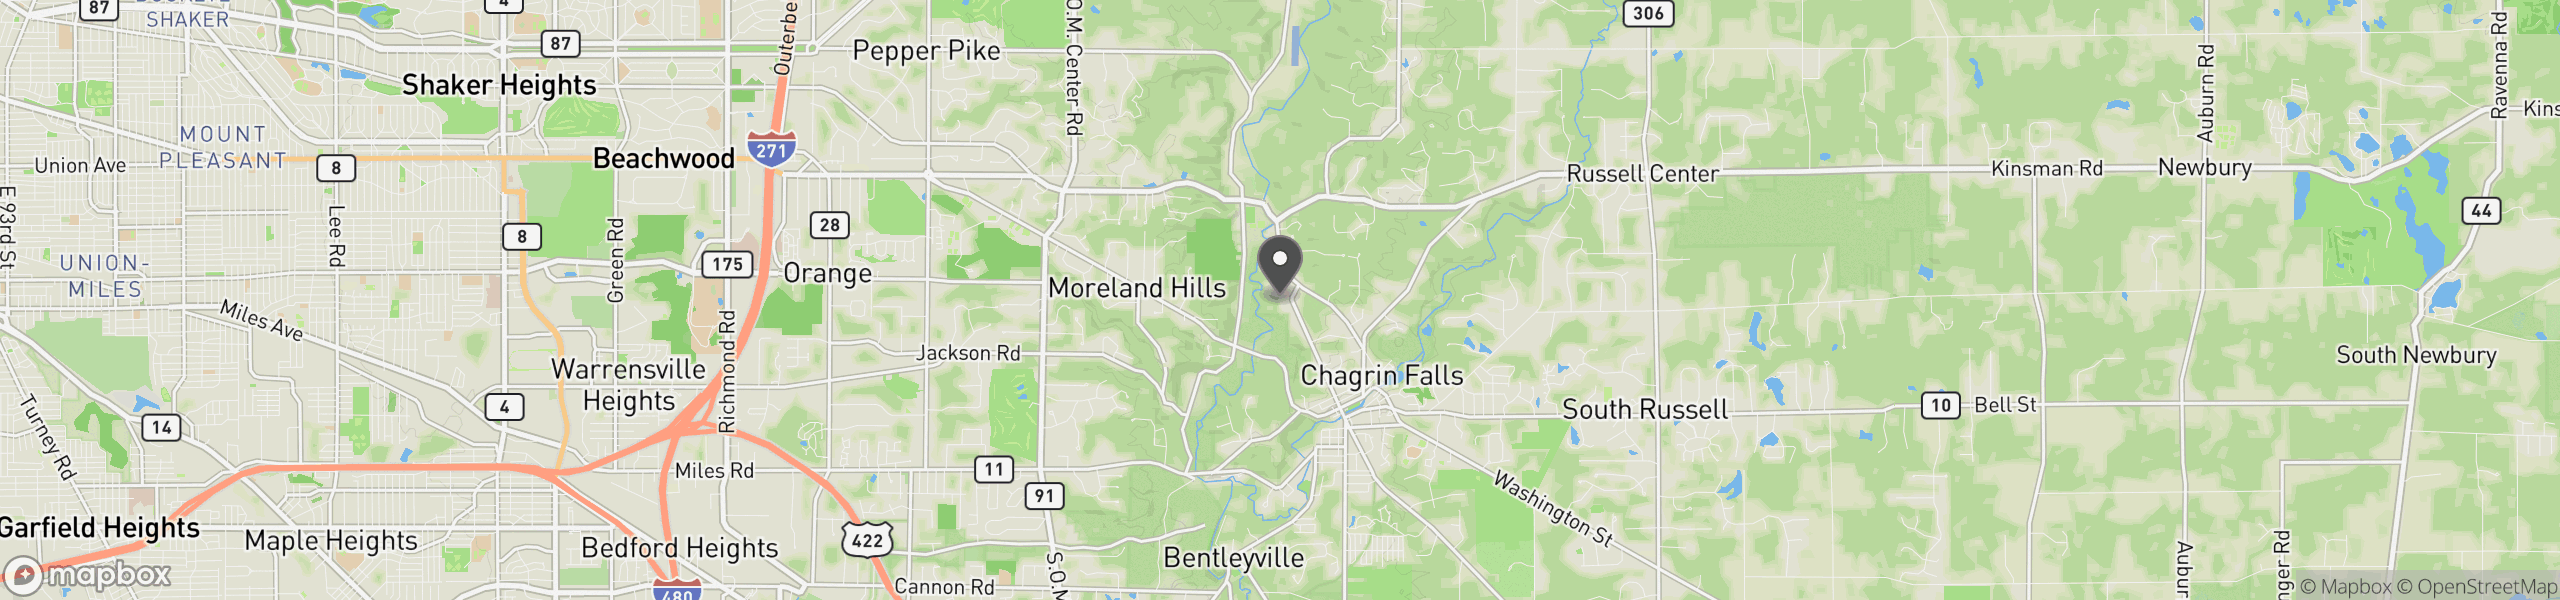 Chagrin Falls, OH 44022